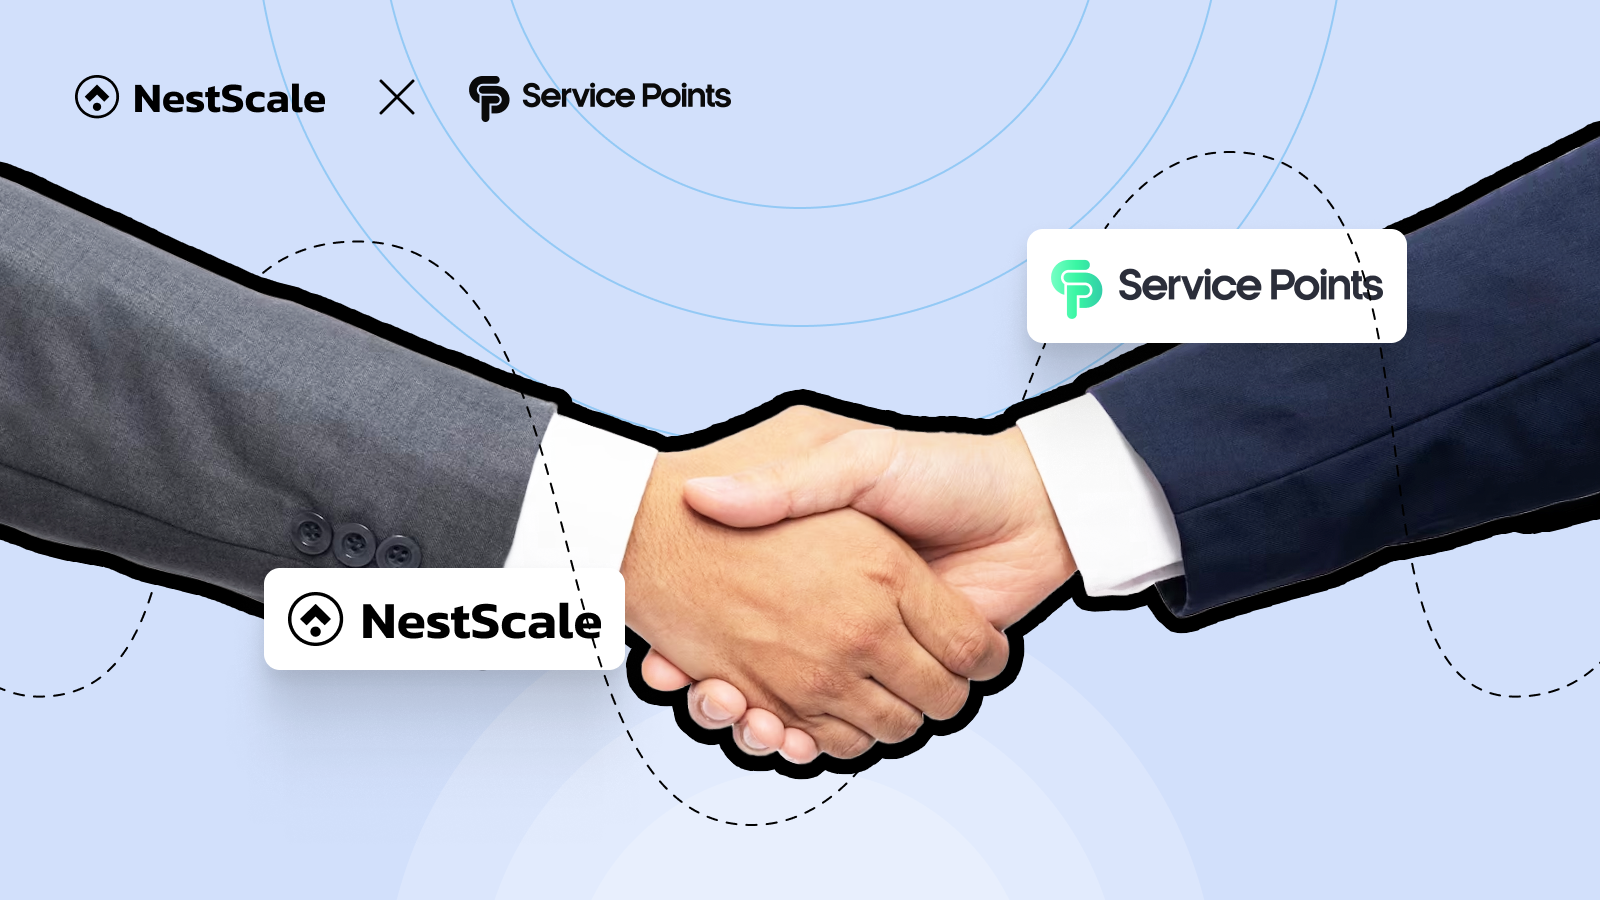 NestScale & Service Points partnership announcement